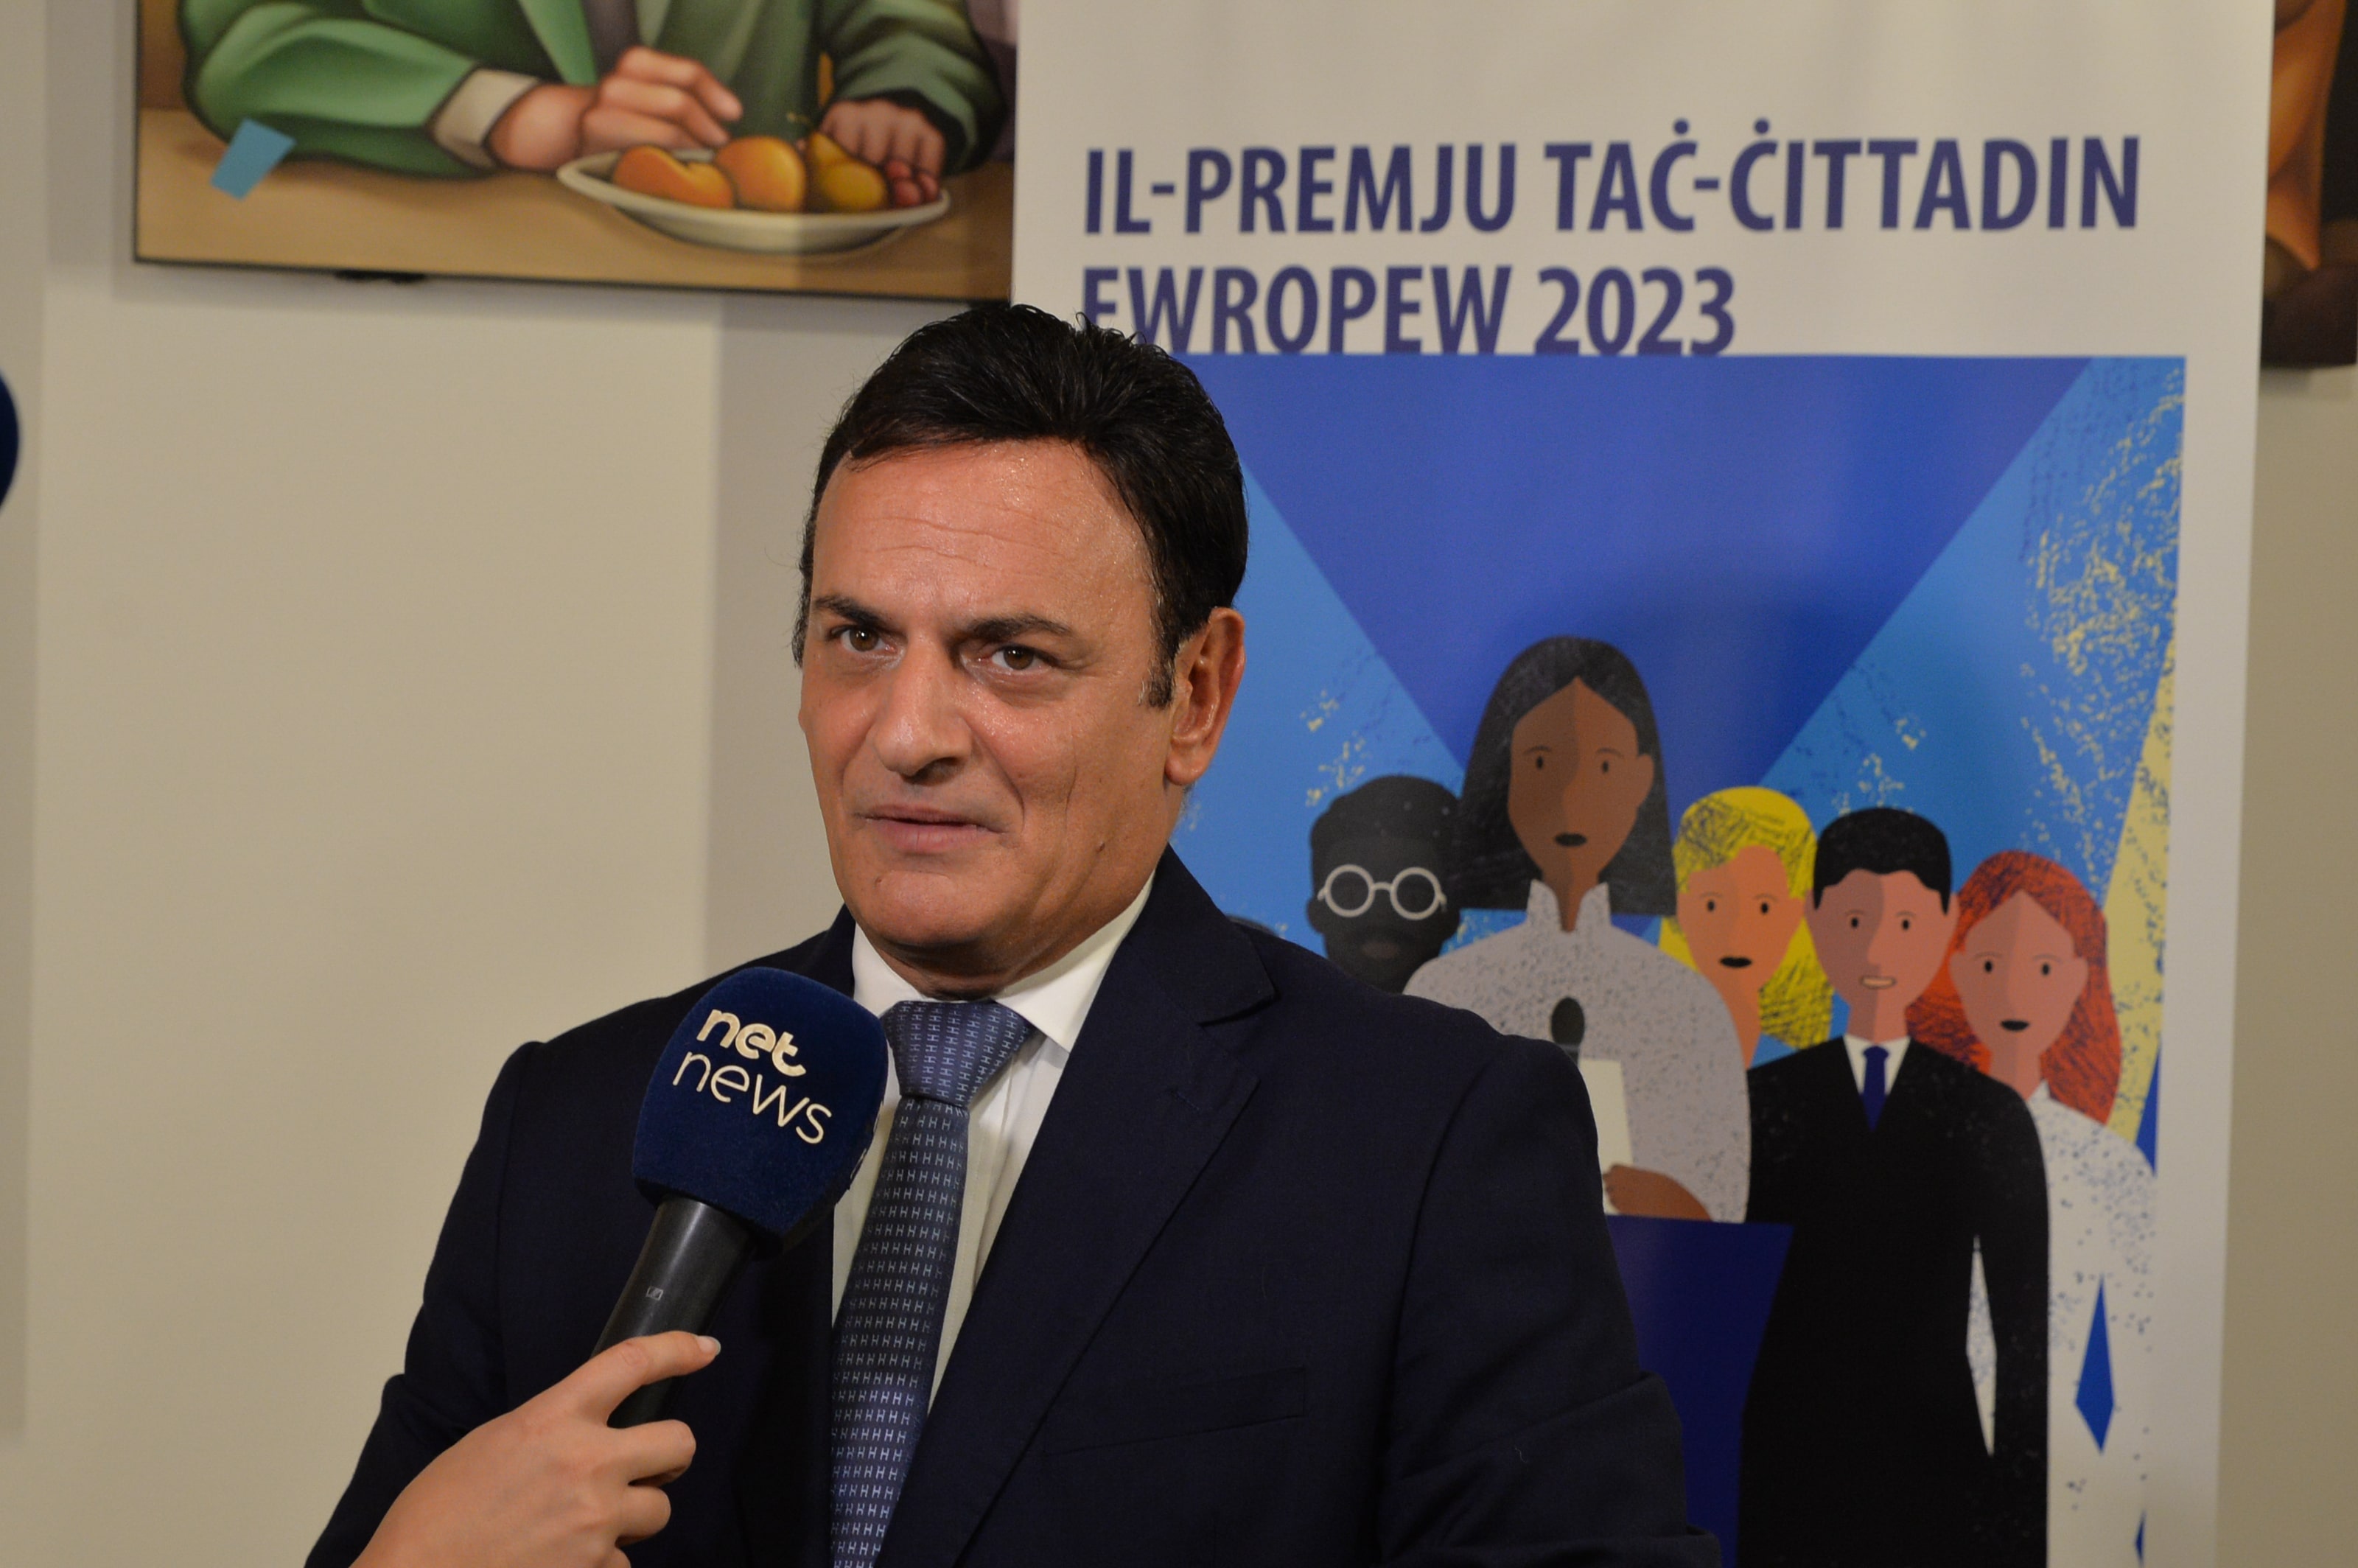 MEP David Casa making a statement about the 2023 European Citizen's Prize